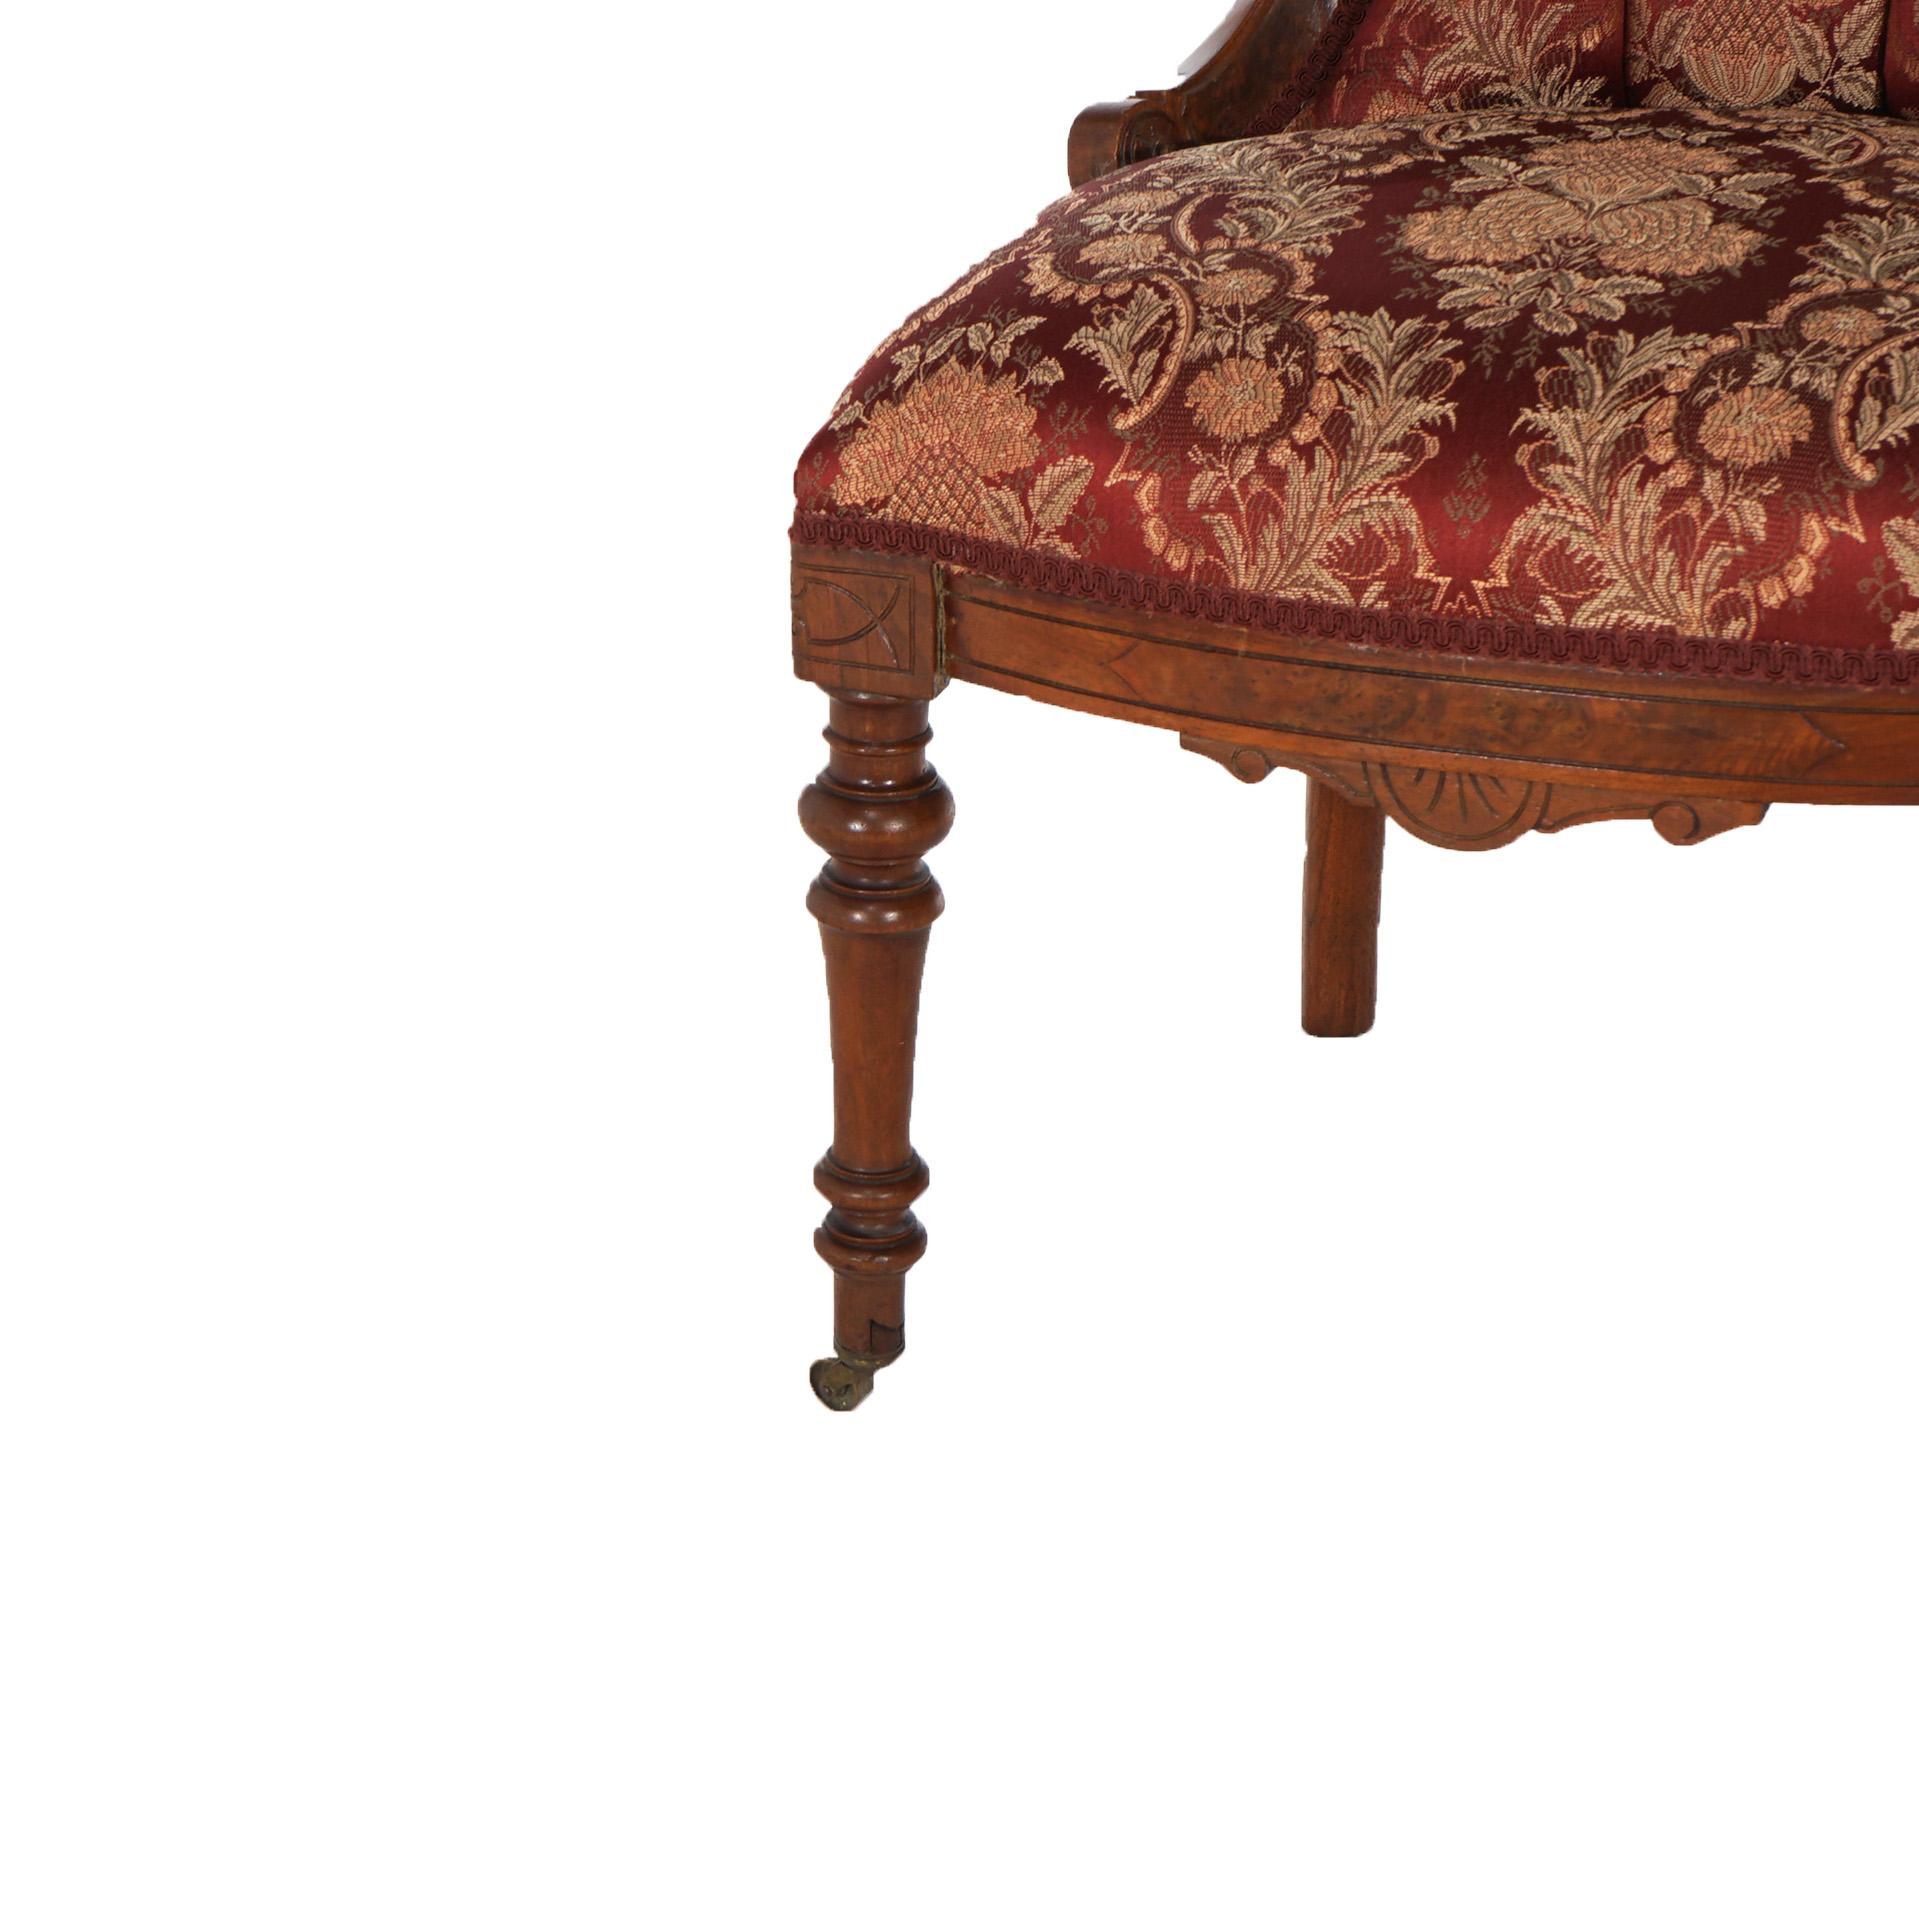 Antique John Jelliff Renaissance Revival Carved Walnut Side Chair C1880 For Sale 1